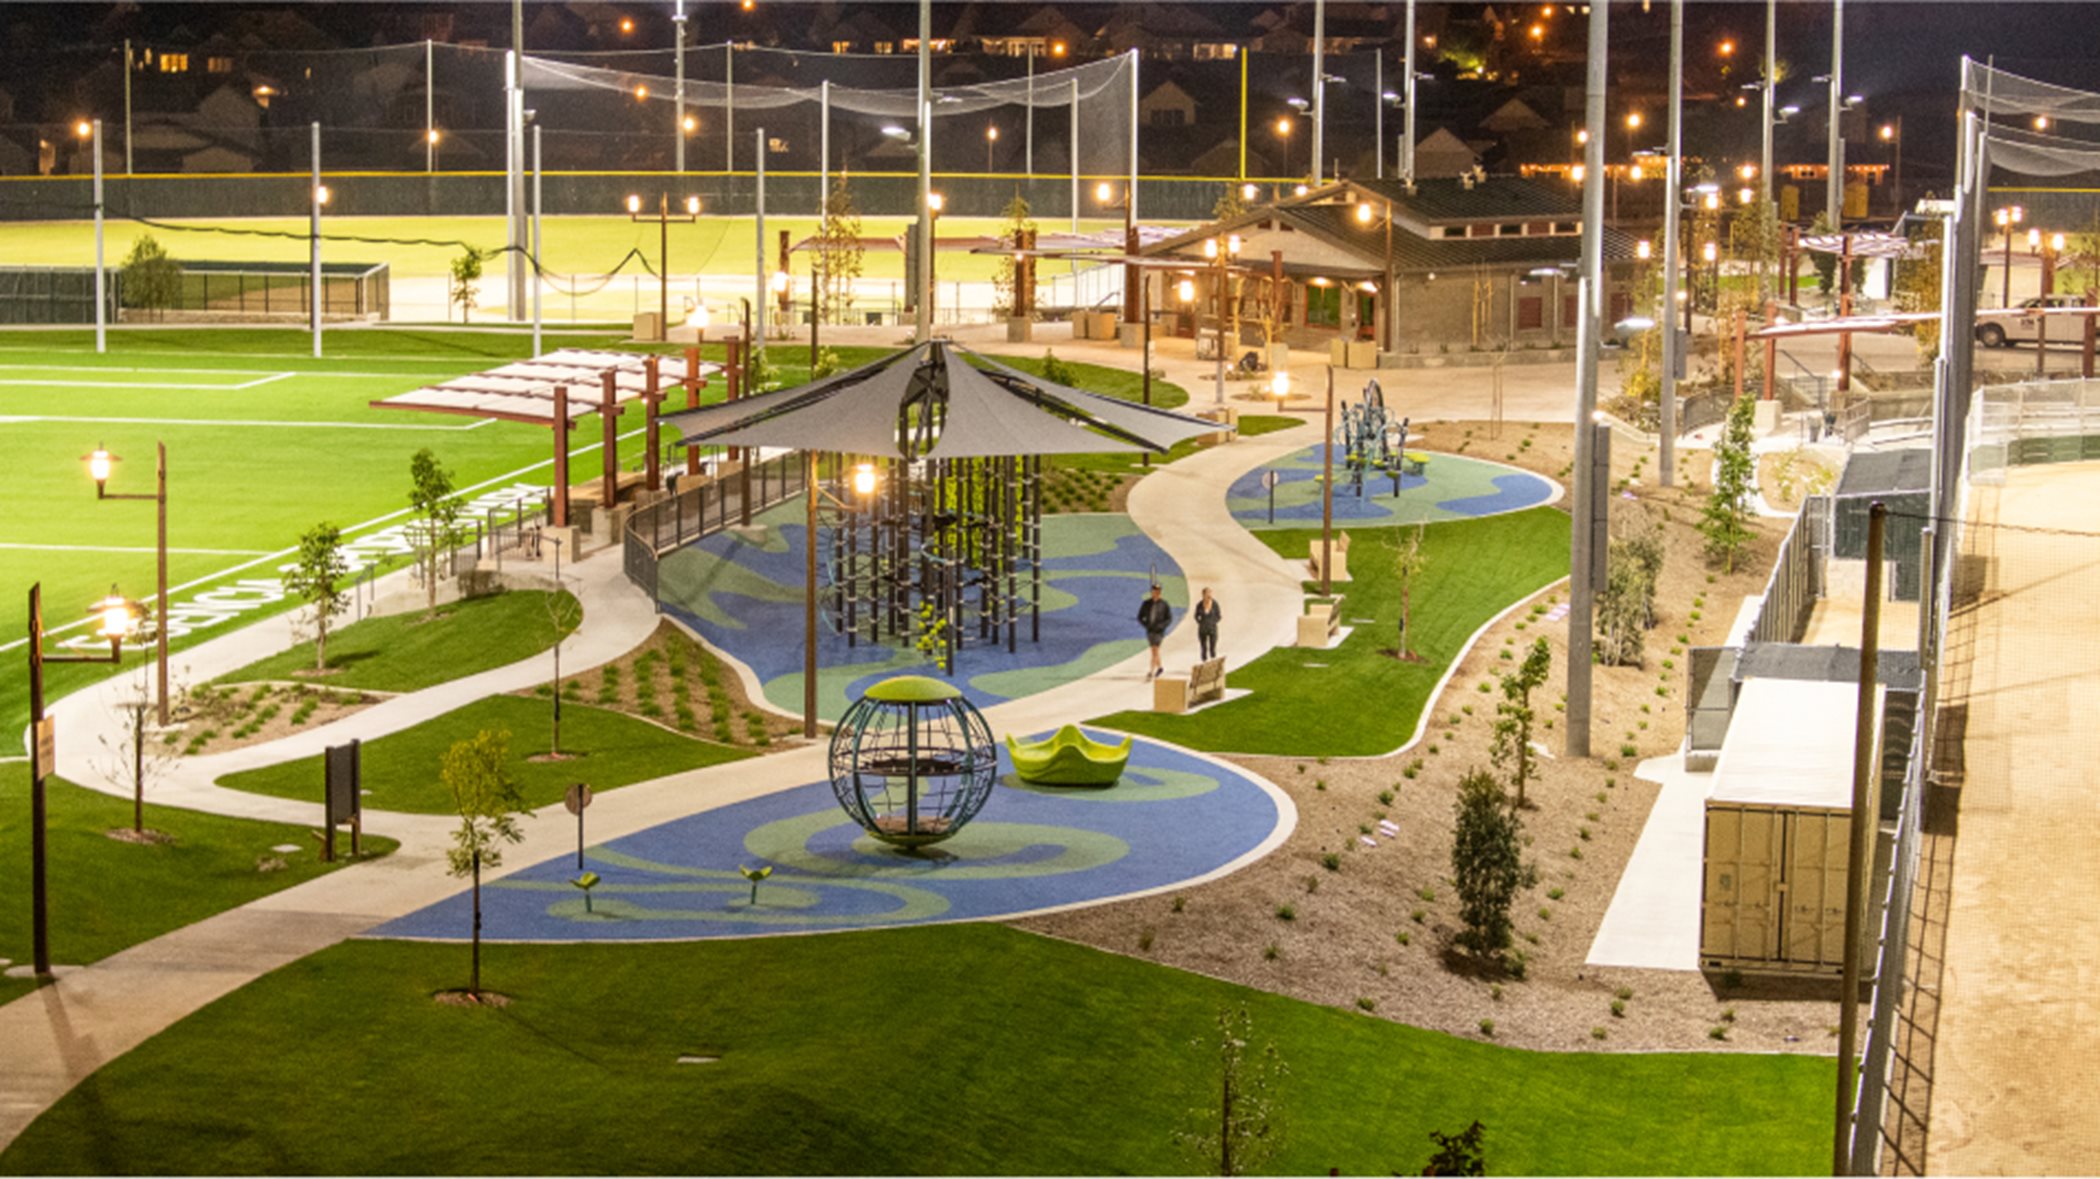 Playground at Escencia sports park